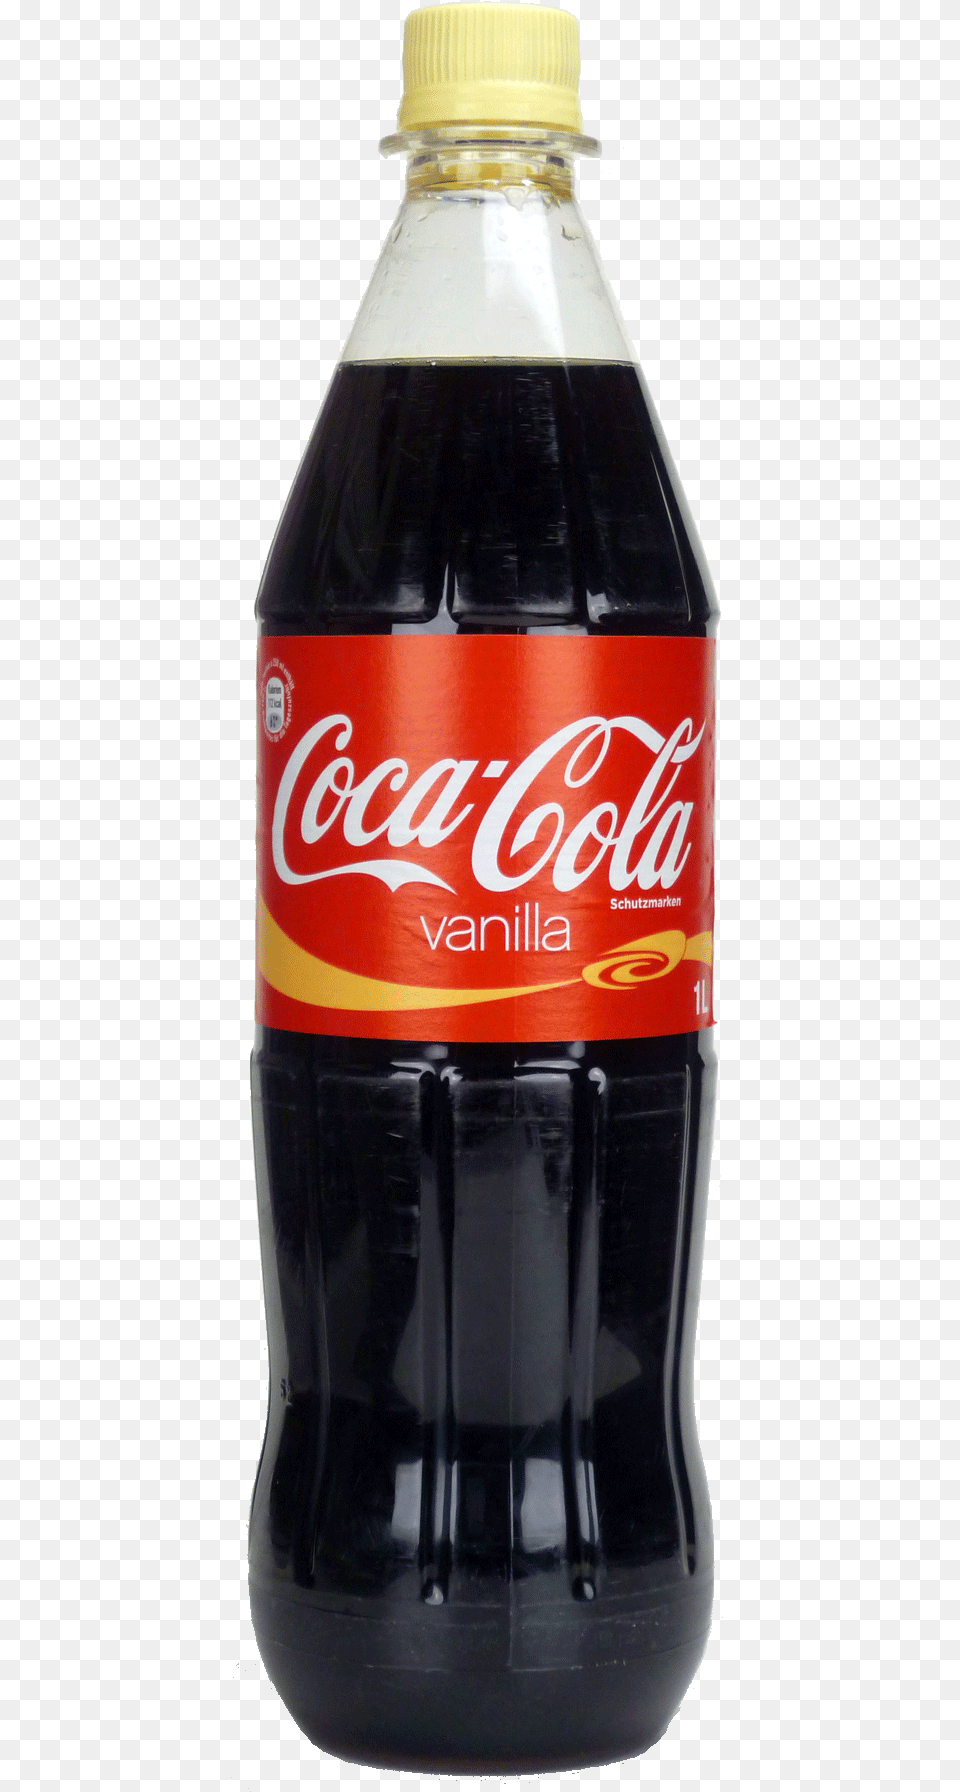 Coca Cola Bottle Imagequottitle Coca Cola Vanilla, Beverage, Coke, Soda, Alcohol Free Transparent Png